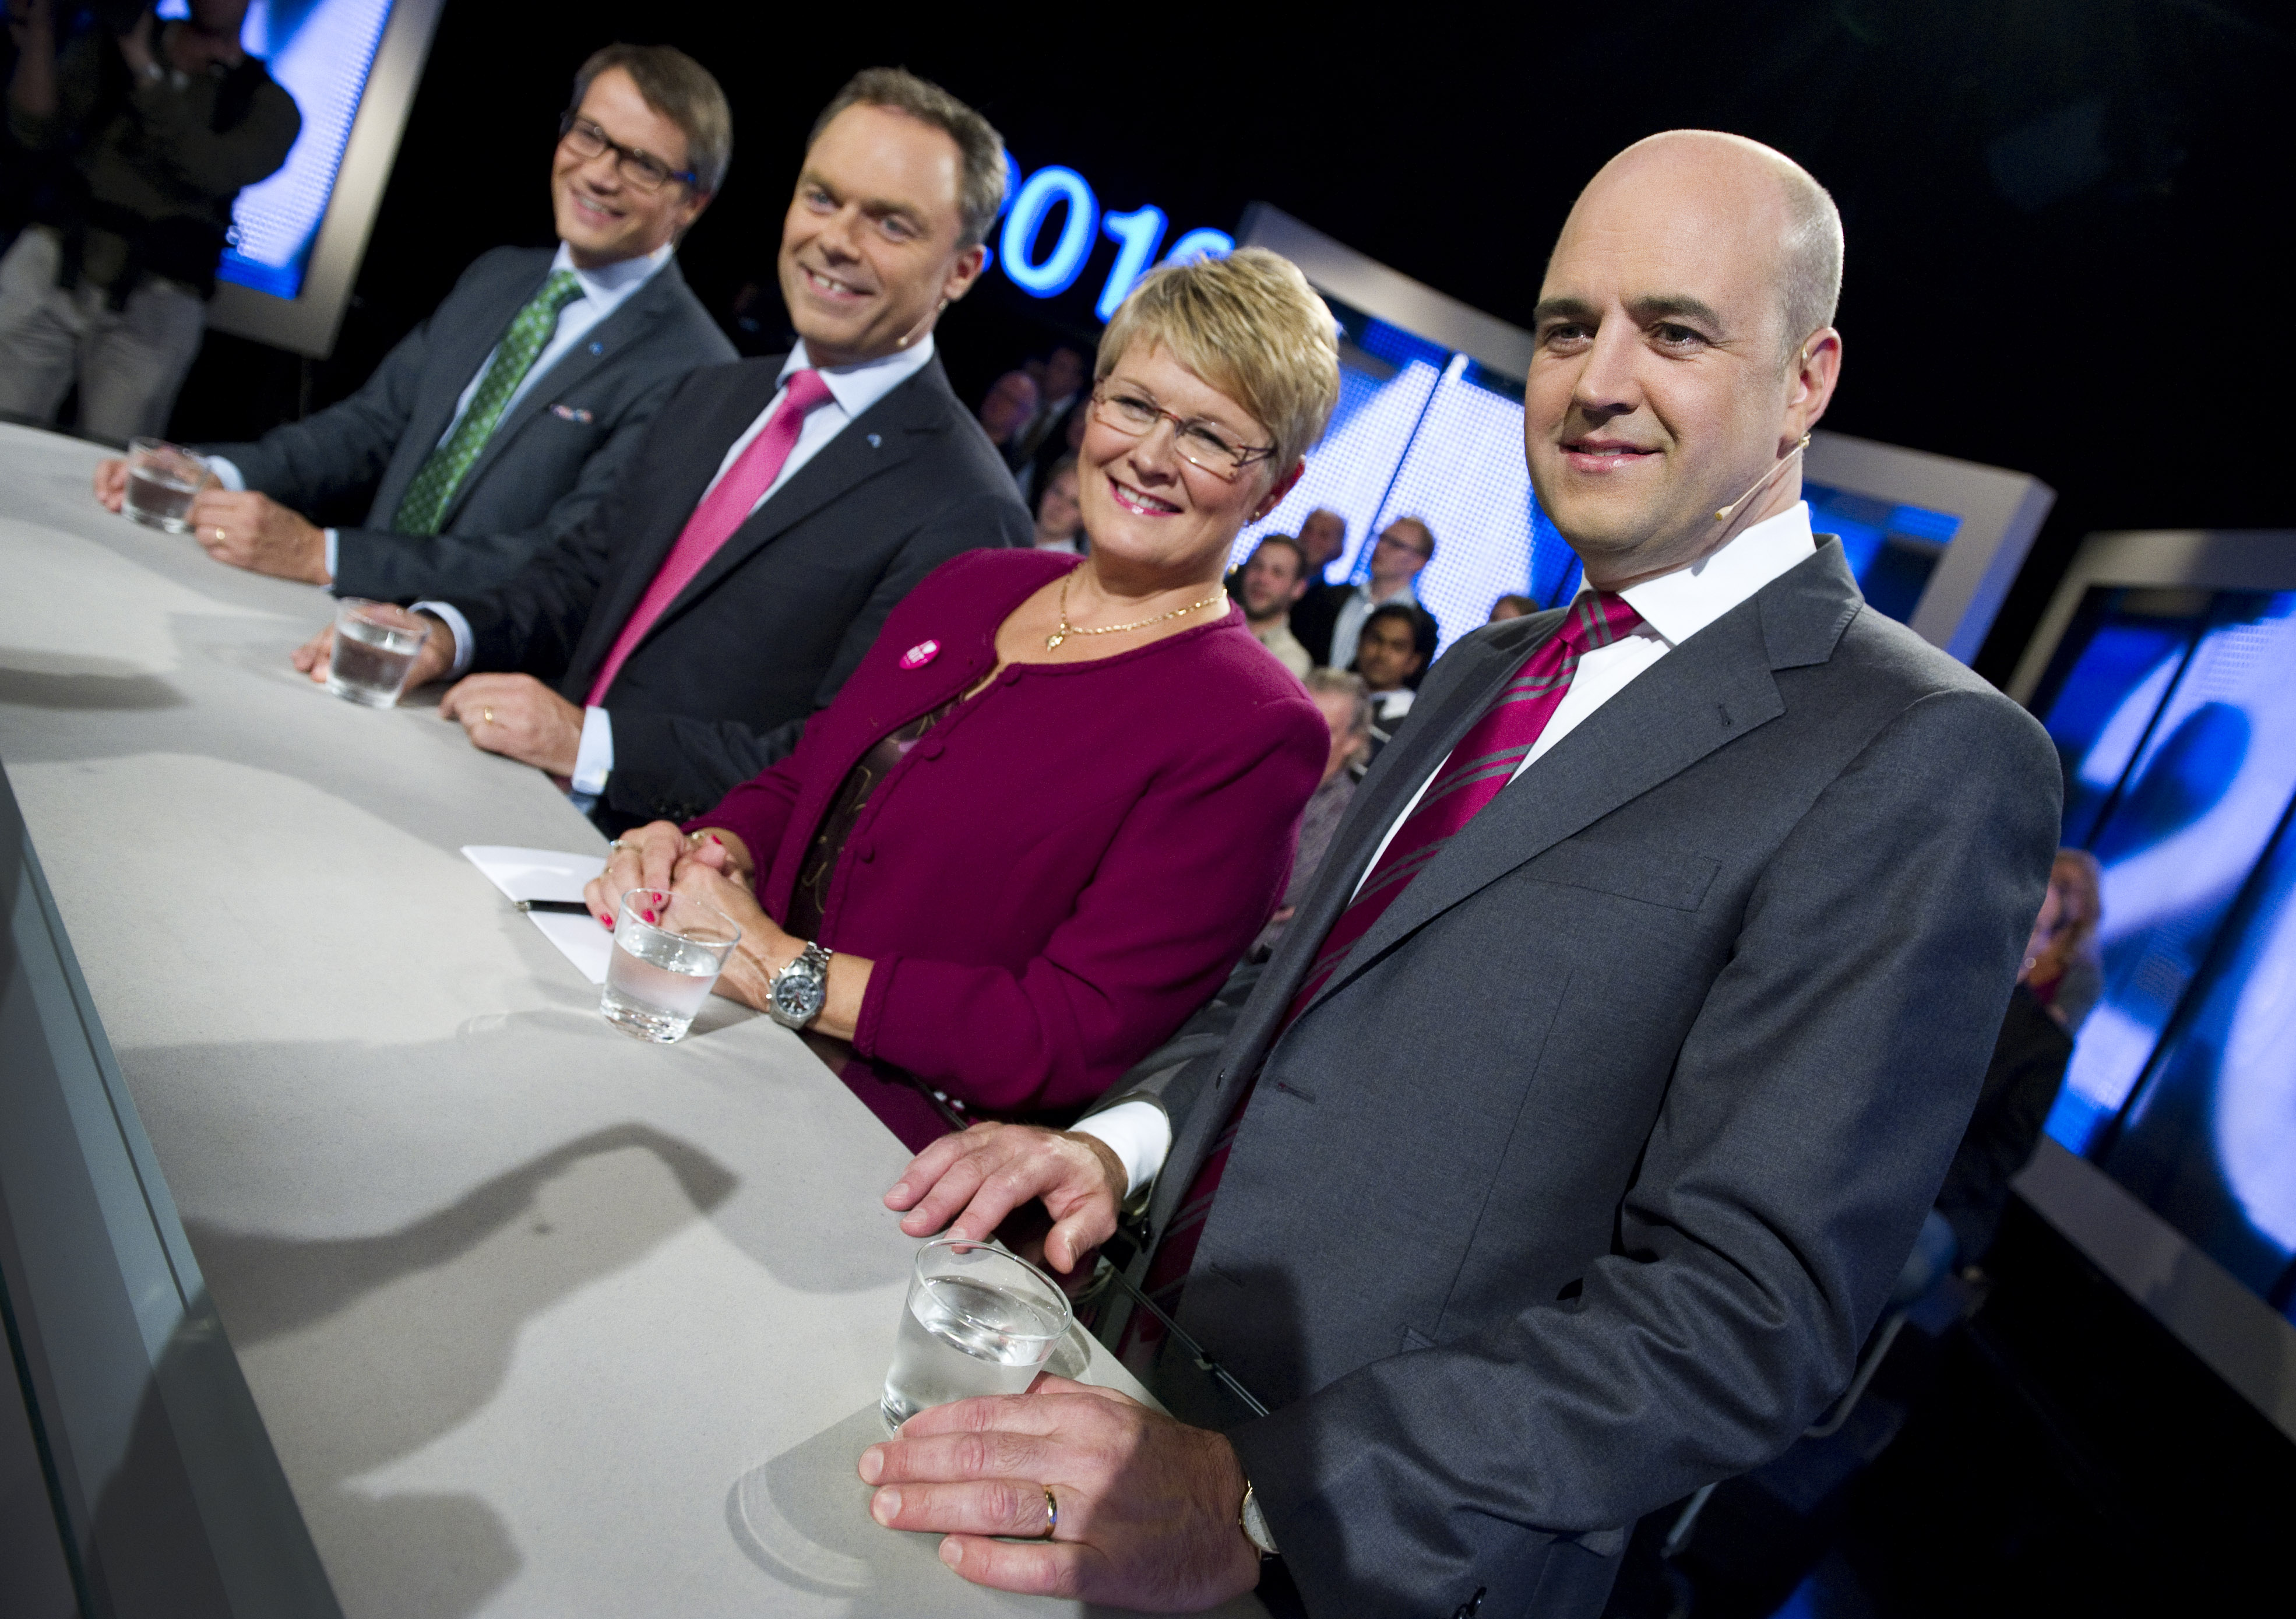 Jan Björklund, Malou von Sivers, Alliansen, Fredrik Reinfeldt, Partiledarutfrågning, TV4, Riksdagsvalet 2010, Jenny Östergren